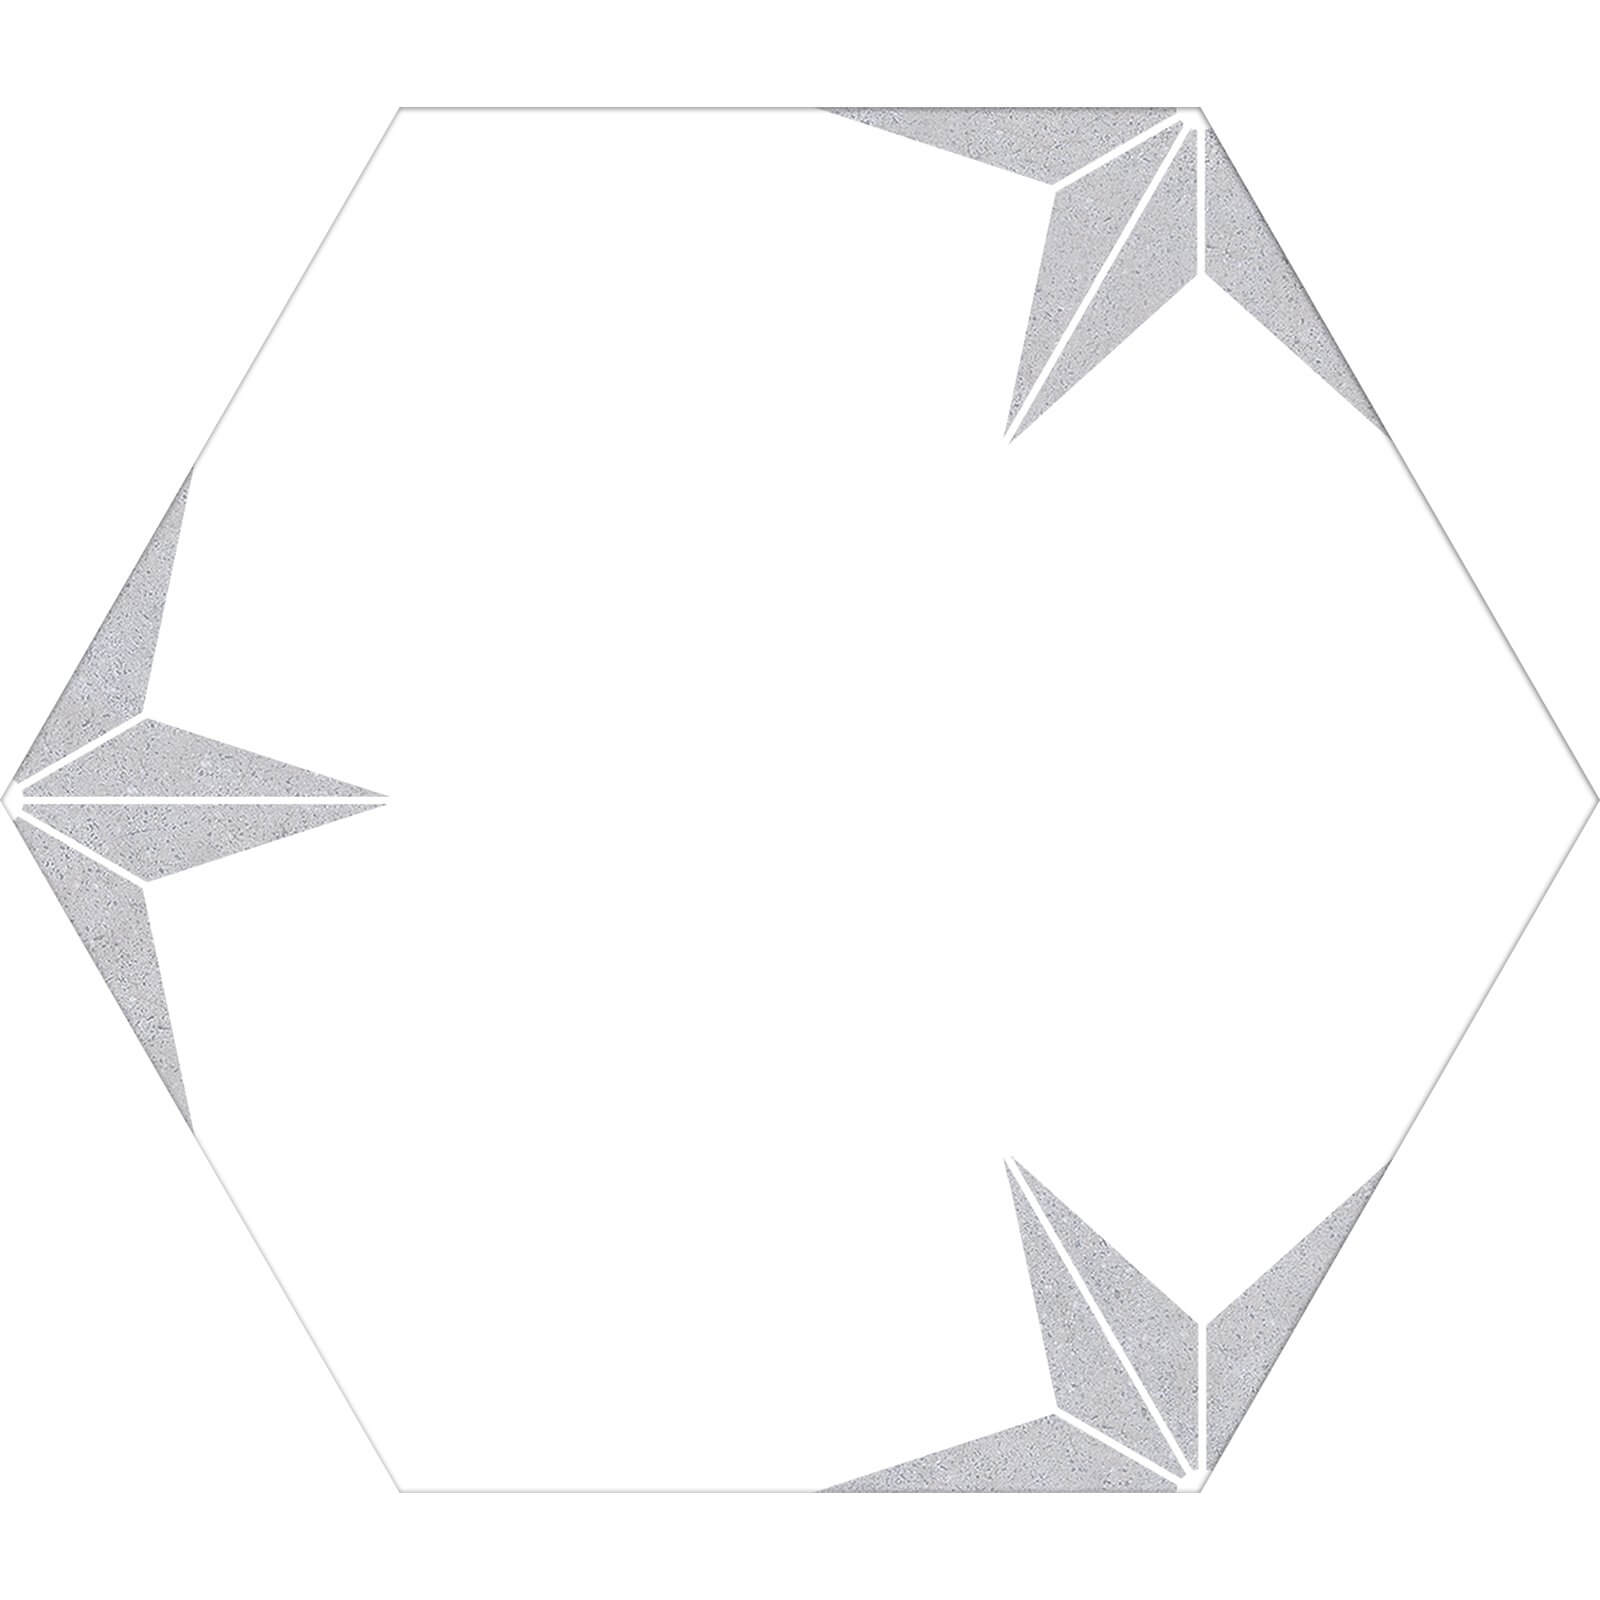 Hexagon Pattern Wall & Floor Tile - 250 x 220mm